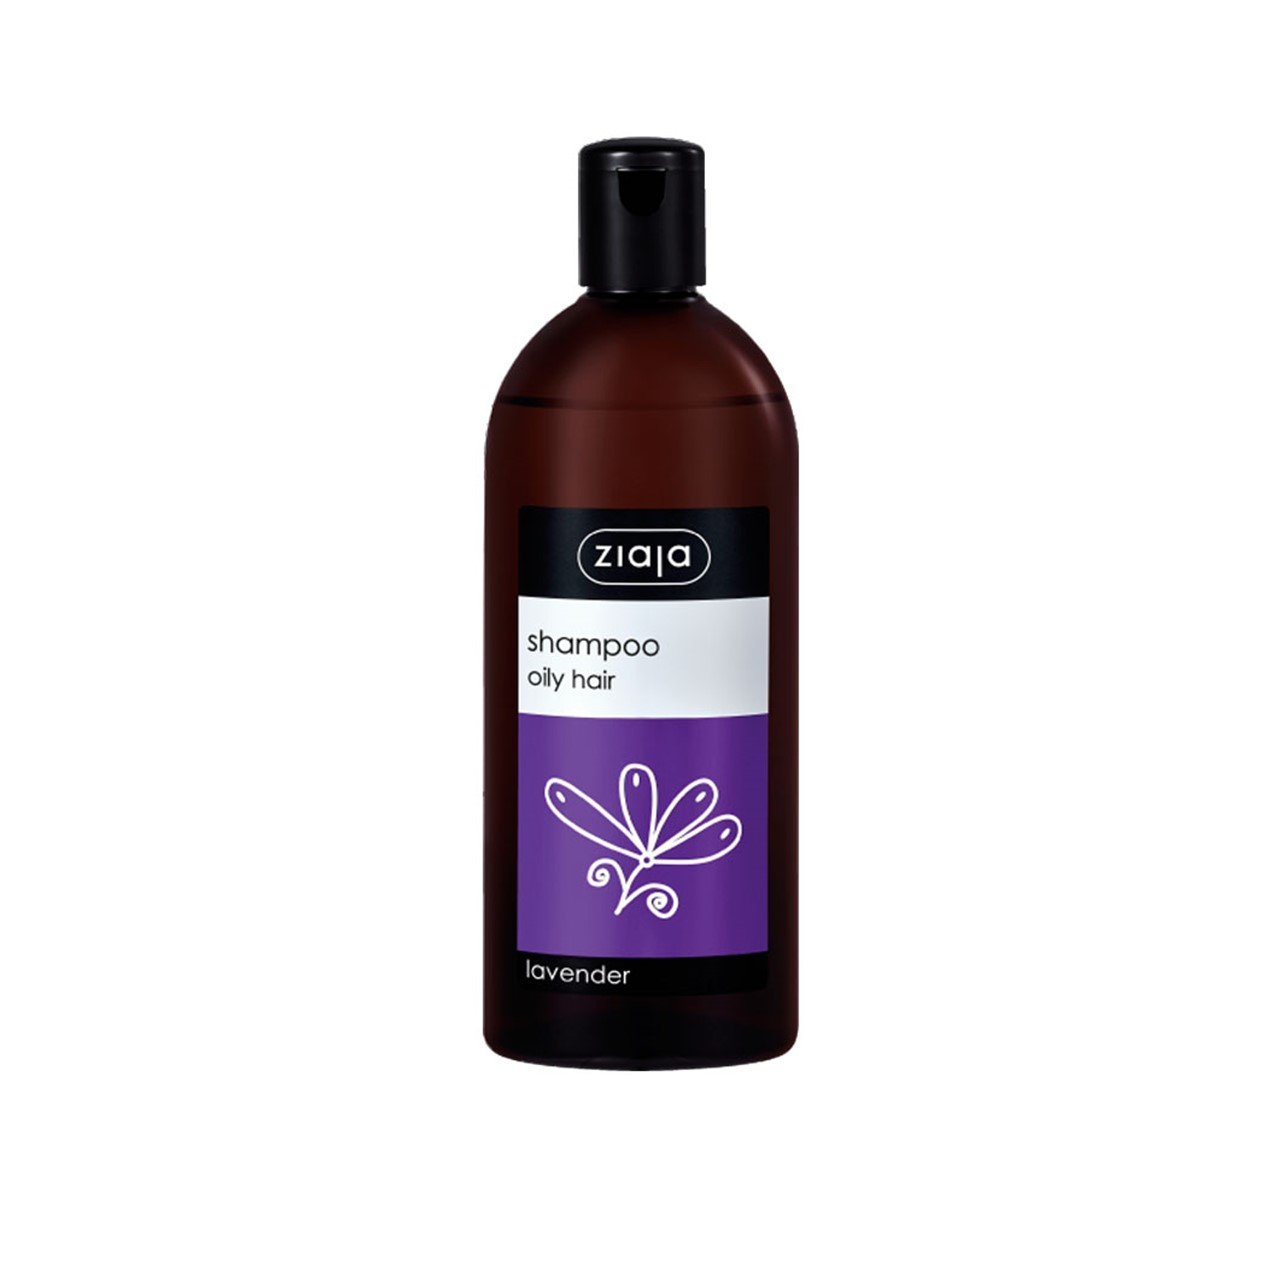 Ziaja Lavender Shampoo Oily Hair 500ml (17.6 fl oz)